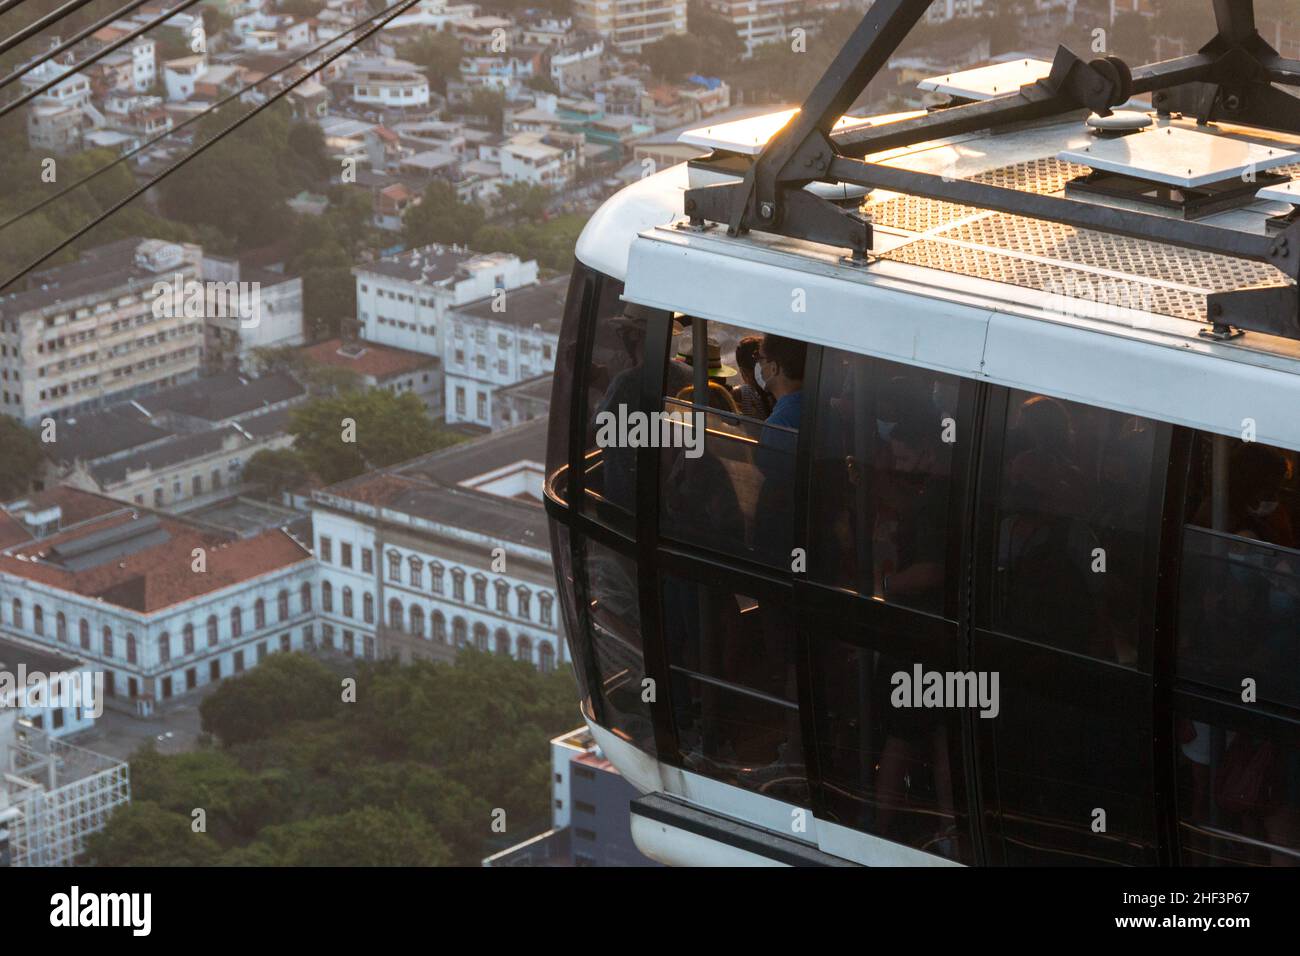 Sugarloaf cable car in Rio de Janeiro, Brazil - December 05, 2021: Sugarloaf cable car in Rio de Janeiro city. Stock Photo